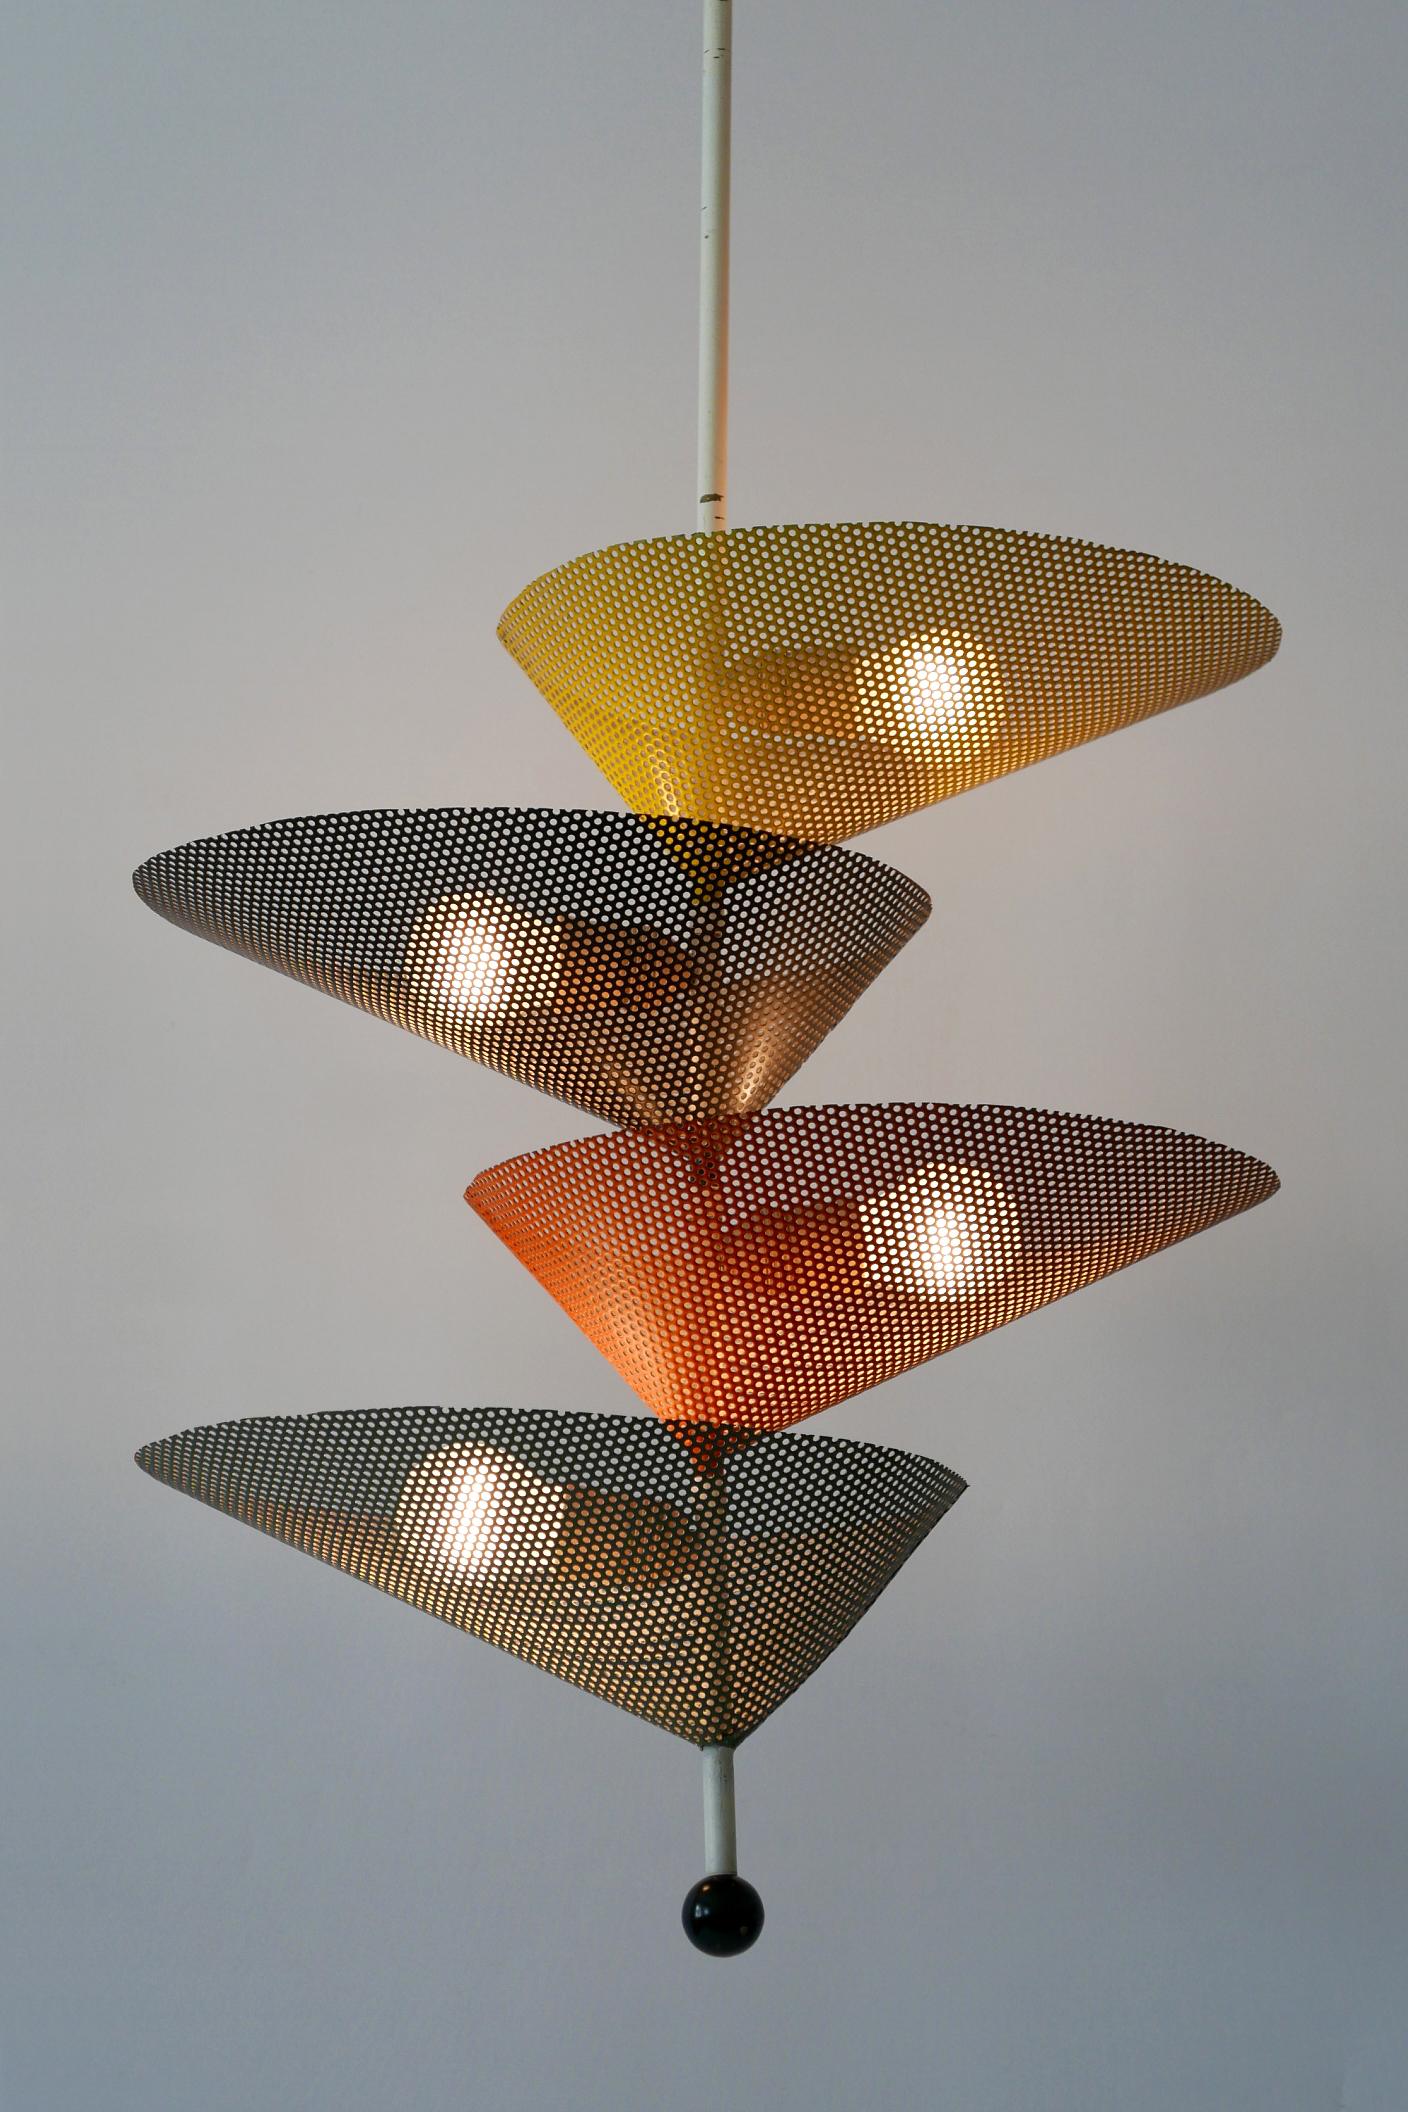 Rare Mid-Century Modern Chandelier or Pendant Lamp by Mathieu Matégot 1950s For Sale 3